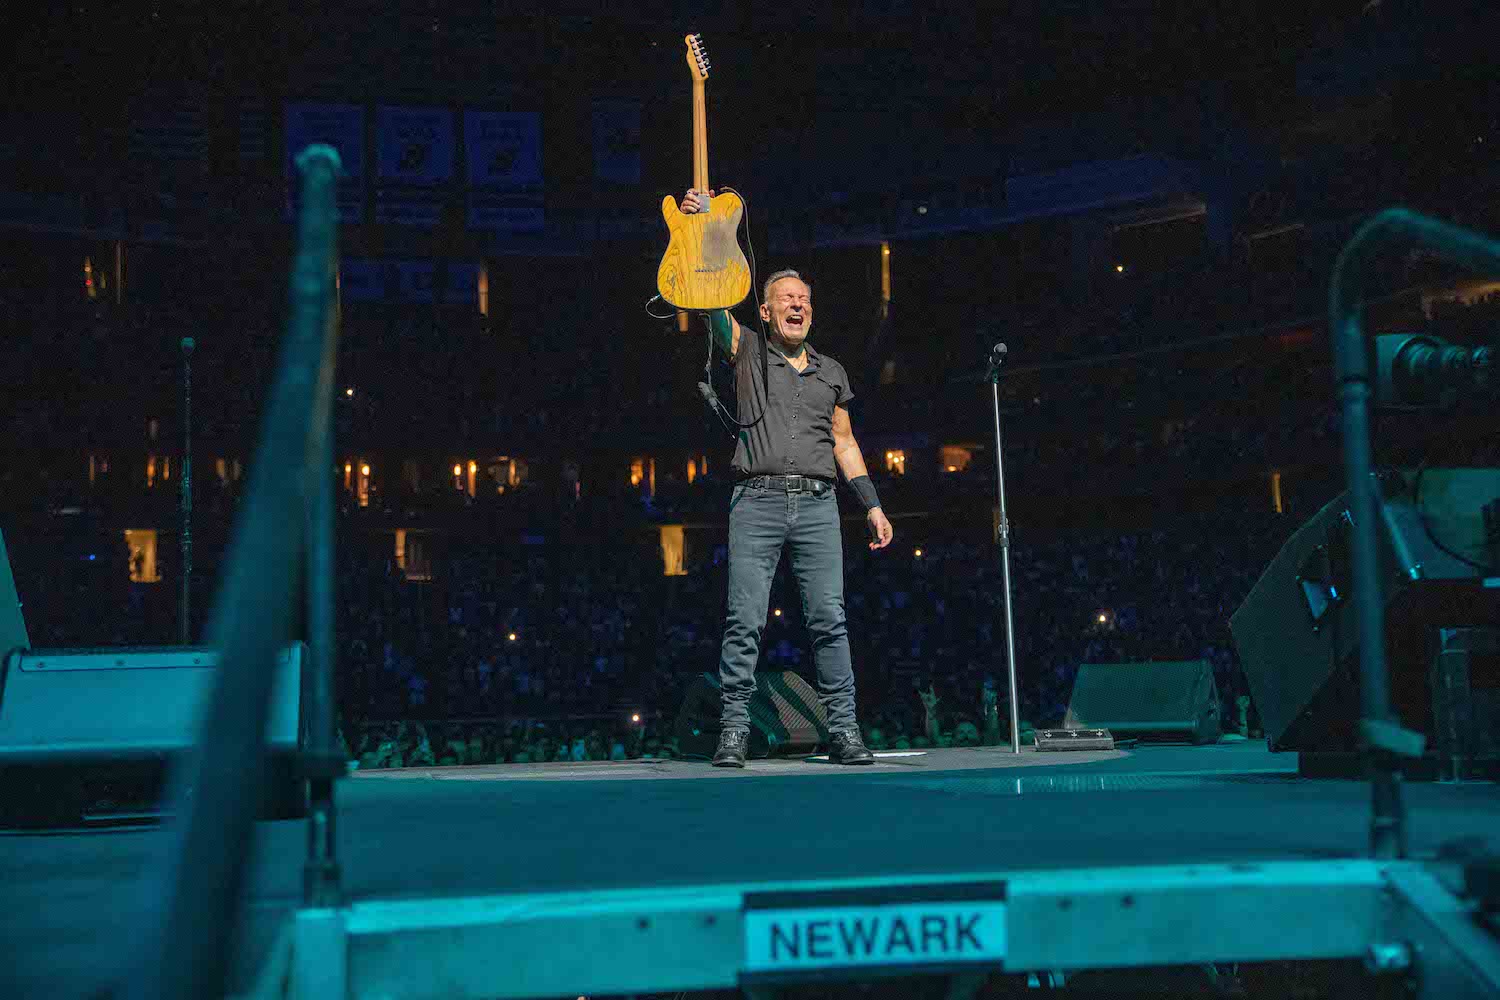 Bruce Springsteen & E Street Band at Prudential Center, Newark, NJ on April 14, 2023.